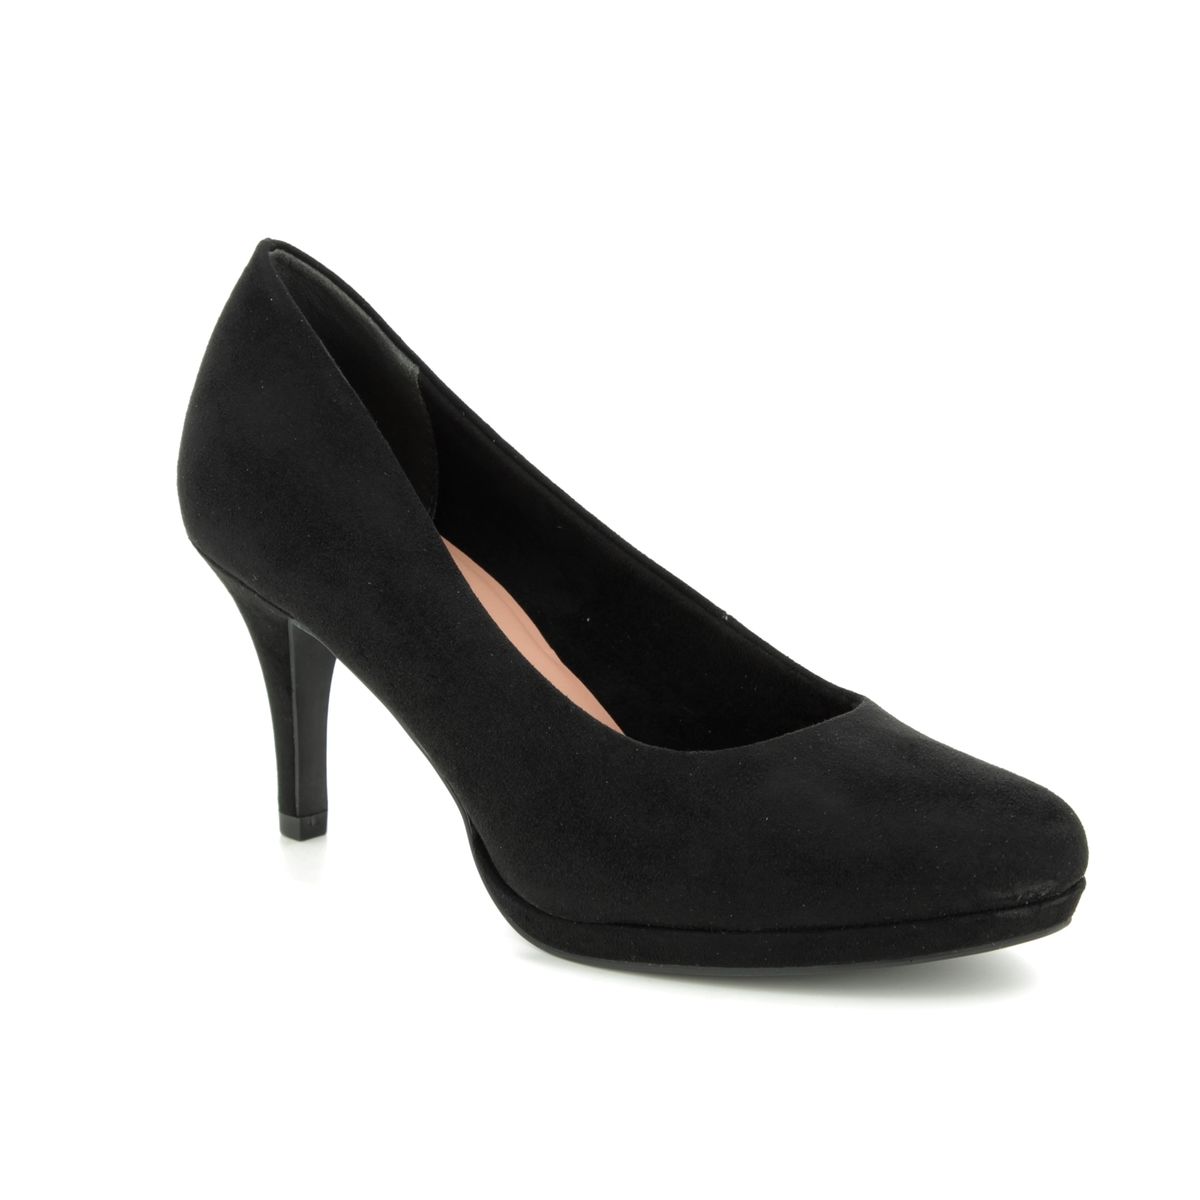 Tamaris Jessa 22464-32-001 Black high-heeled shoes